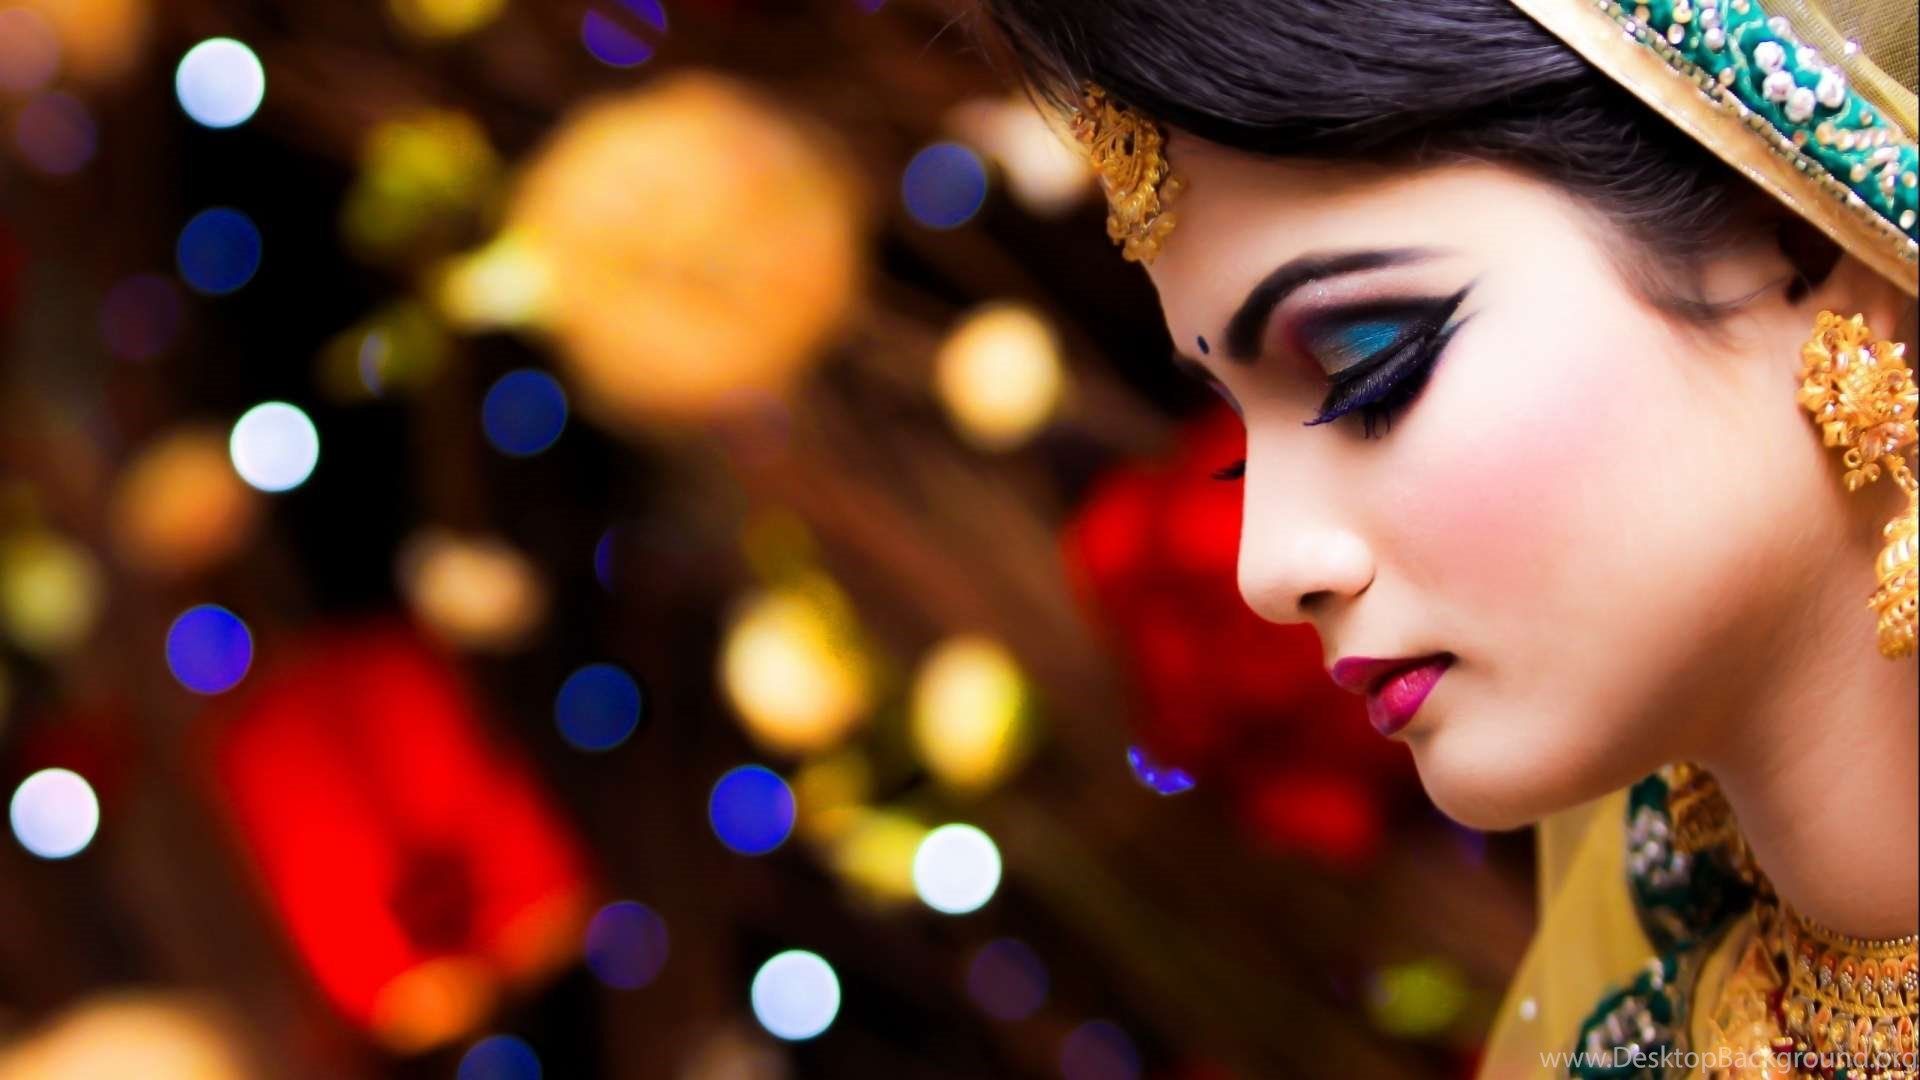 Indian Brides HD Wallpaper Of Indian Bride Makeup & Dress Desktop Background